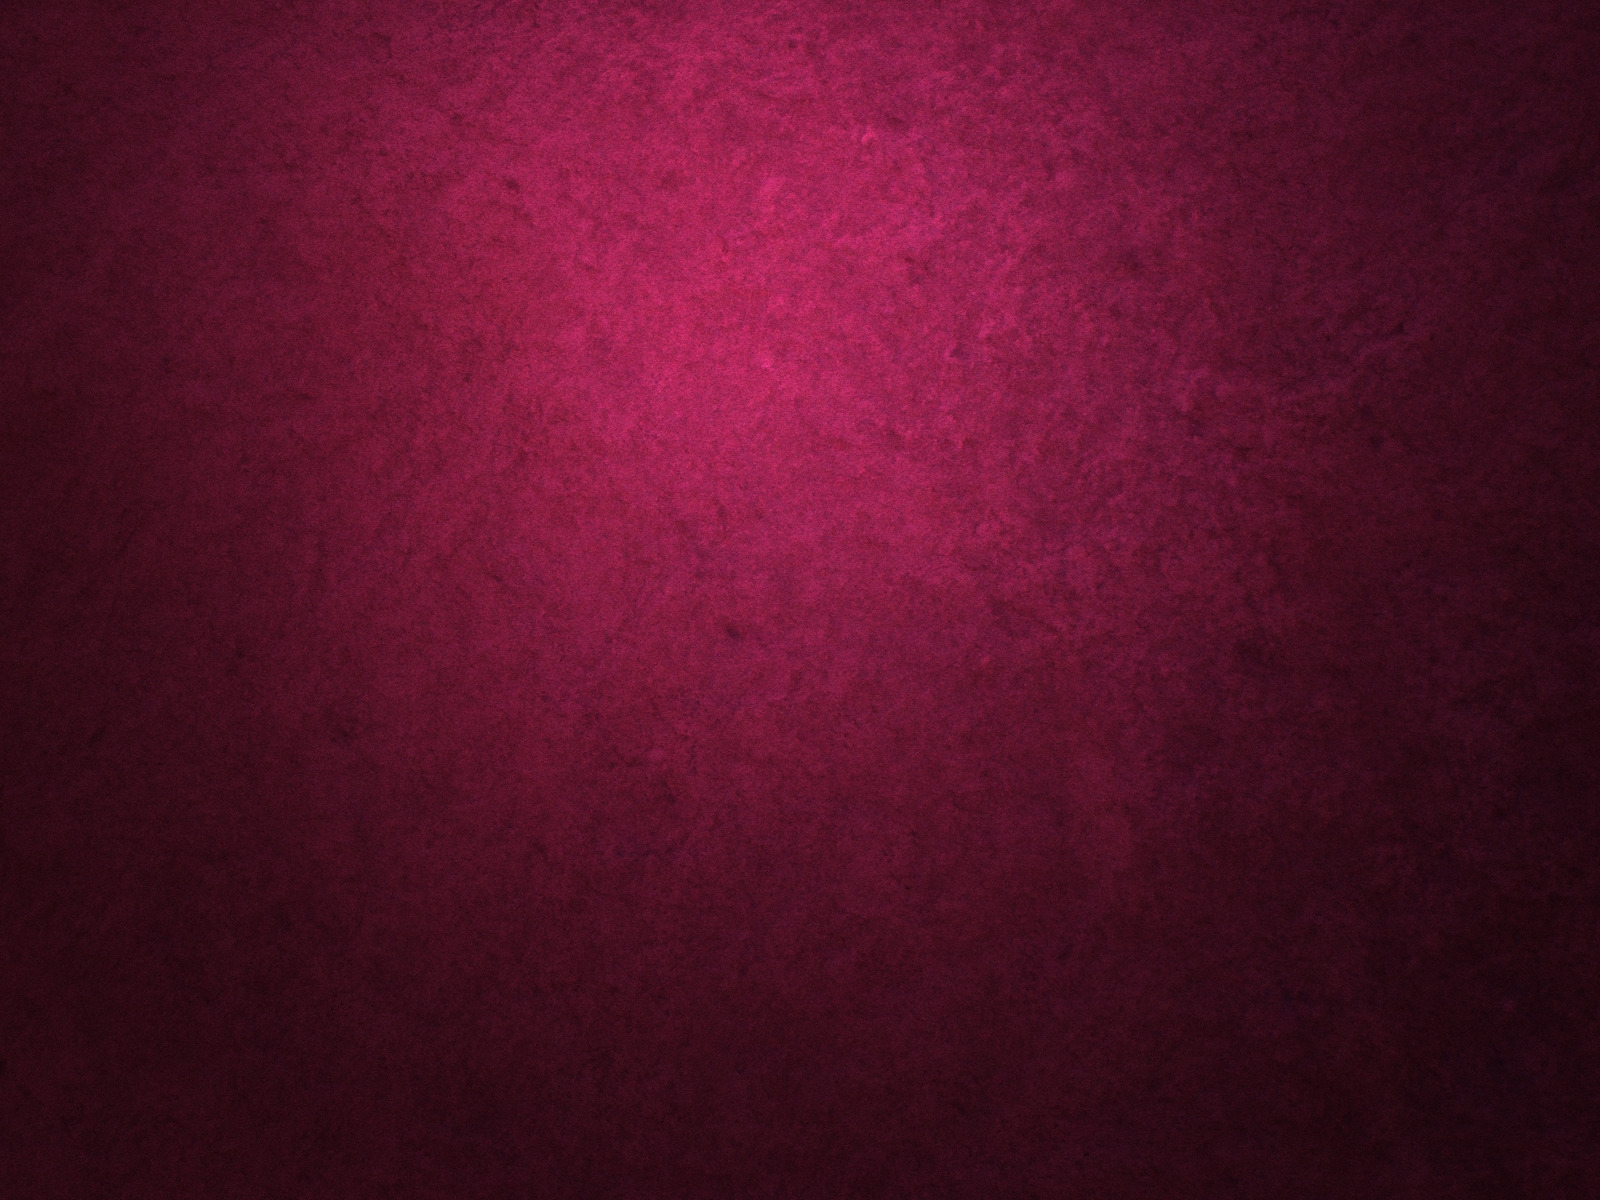 PurpleRough for 1600 x 1200 resolution